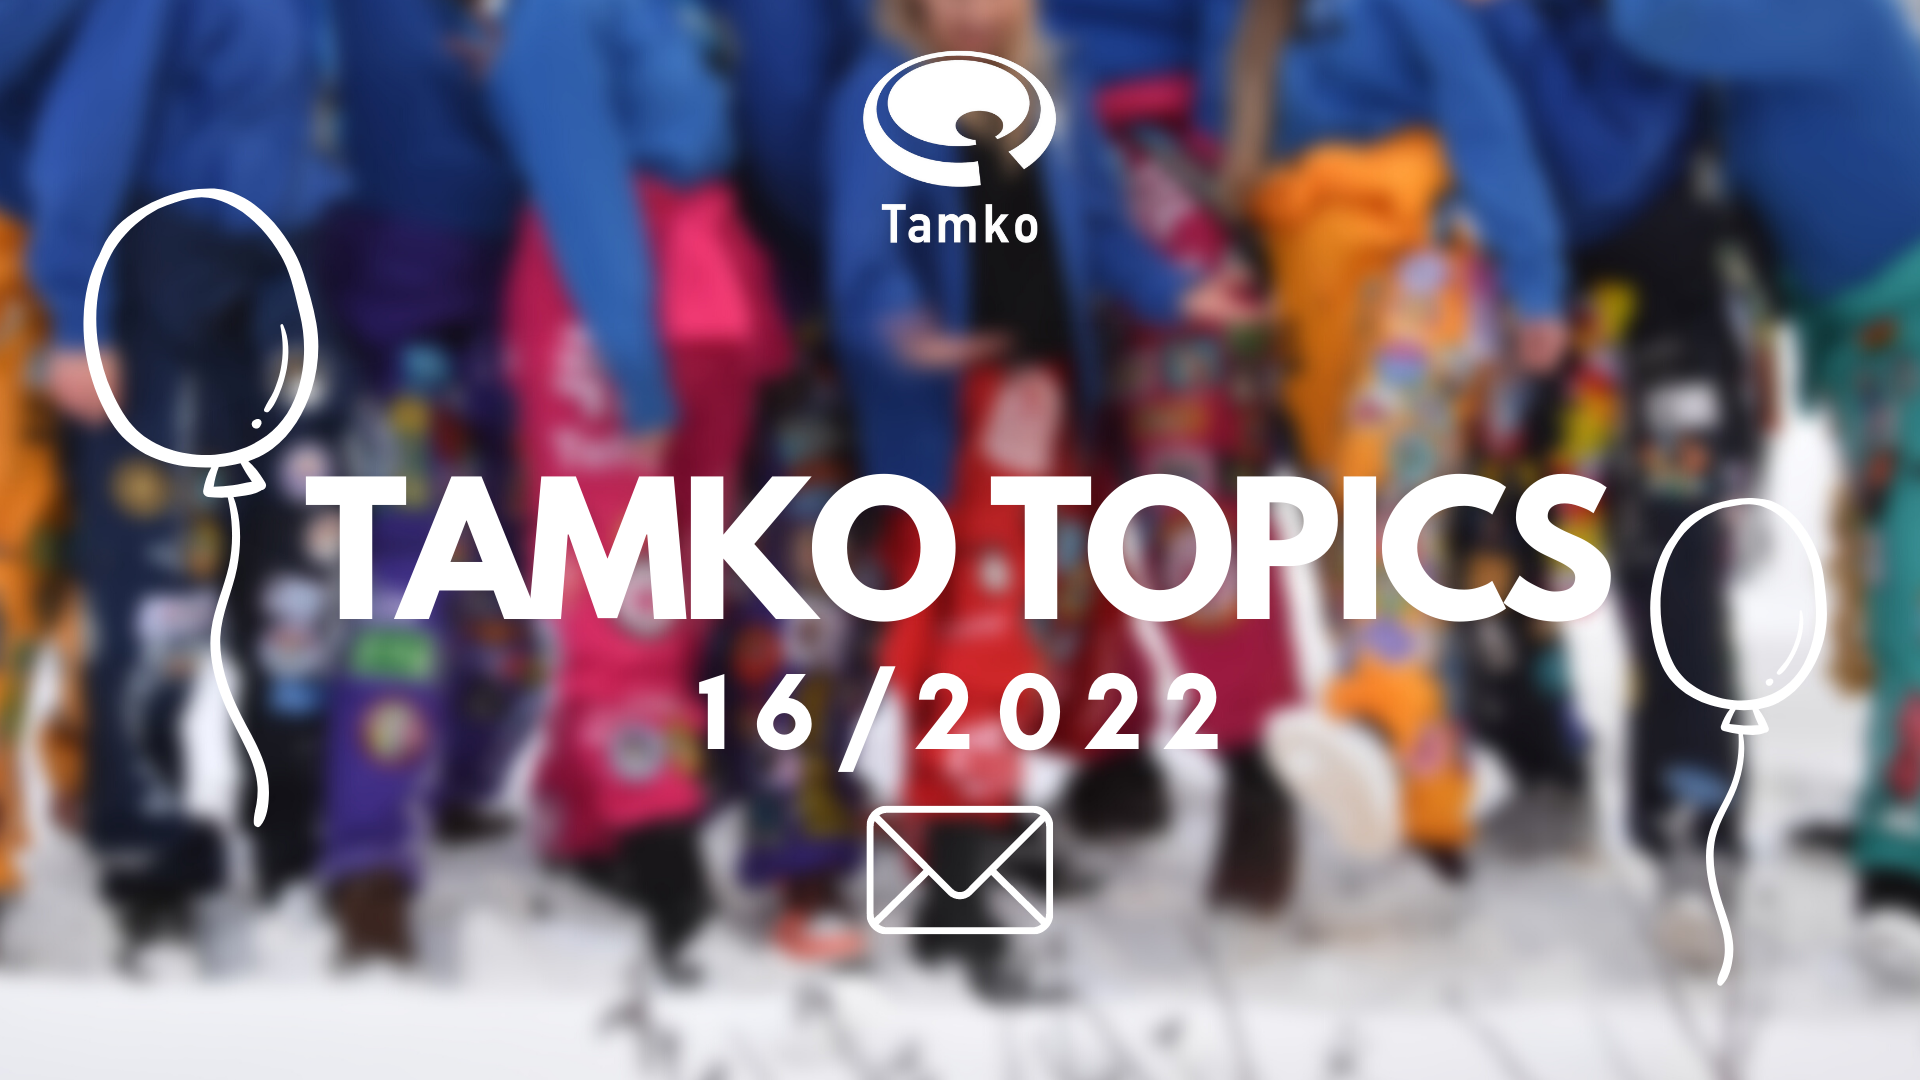 TAMKO TOPICS 16/2022